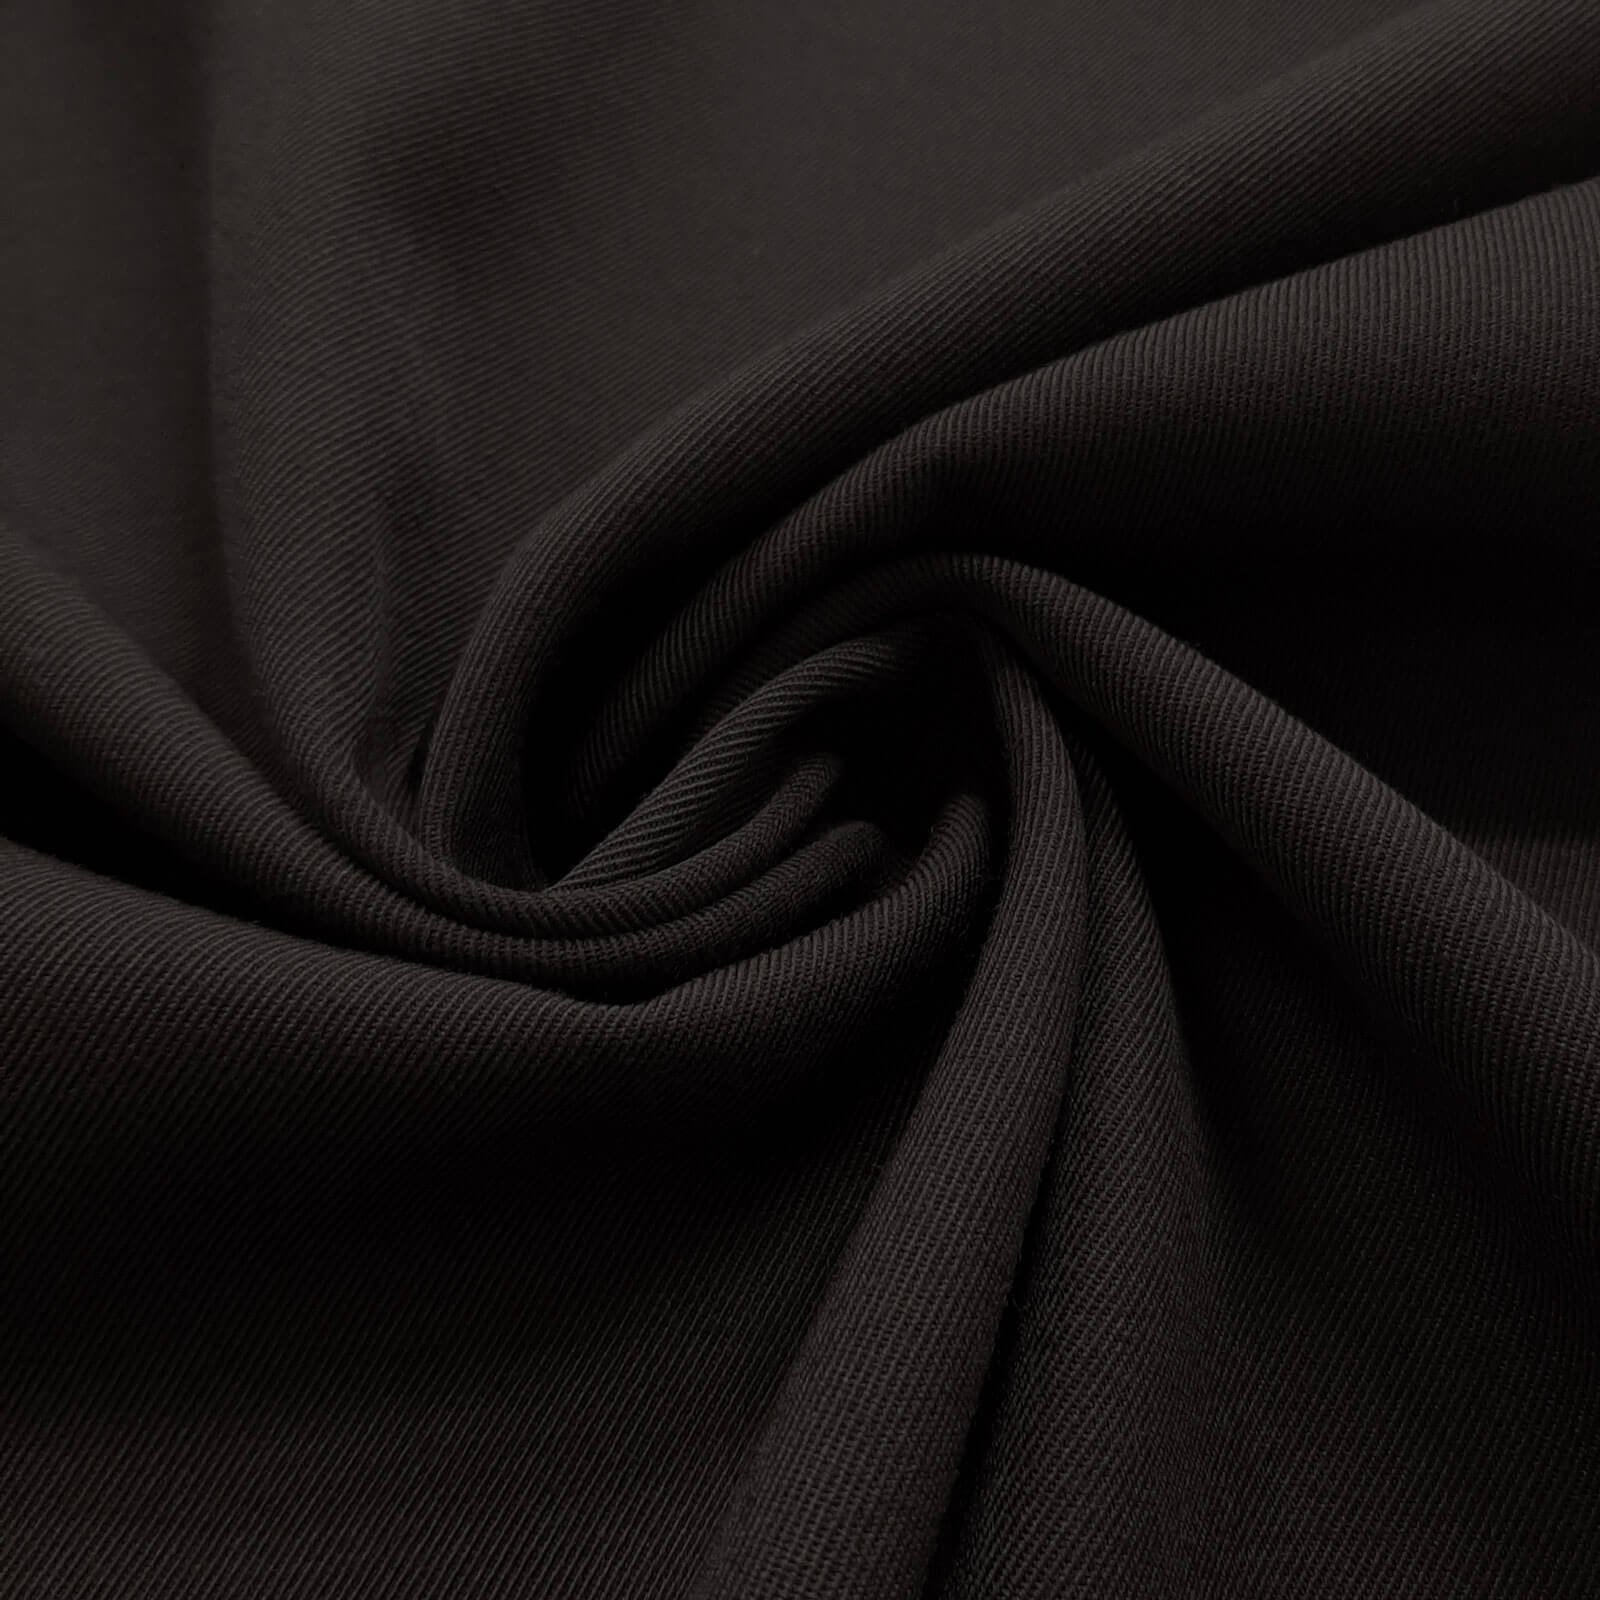 Frisko - Panno di pura lana vergine al 100% / Panno per uniformi - Nero 